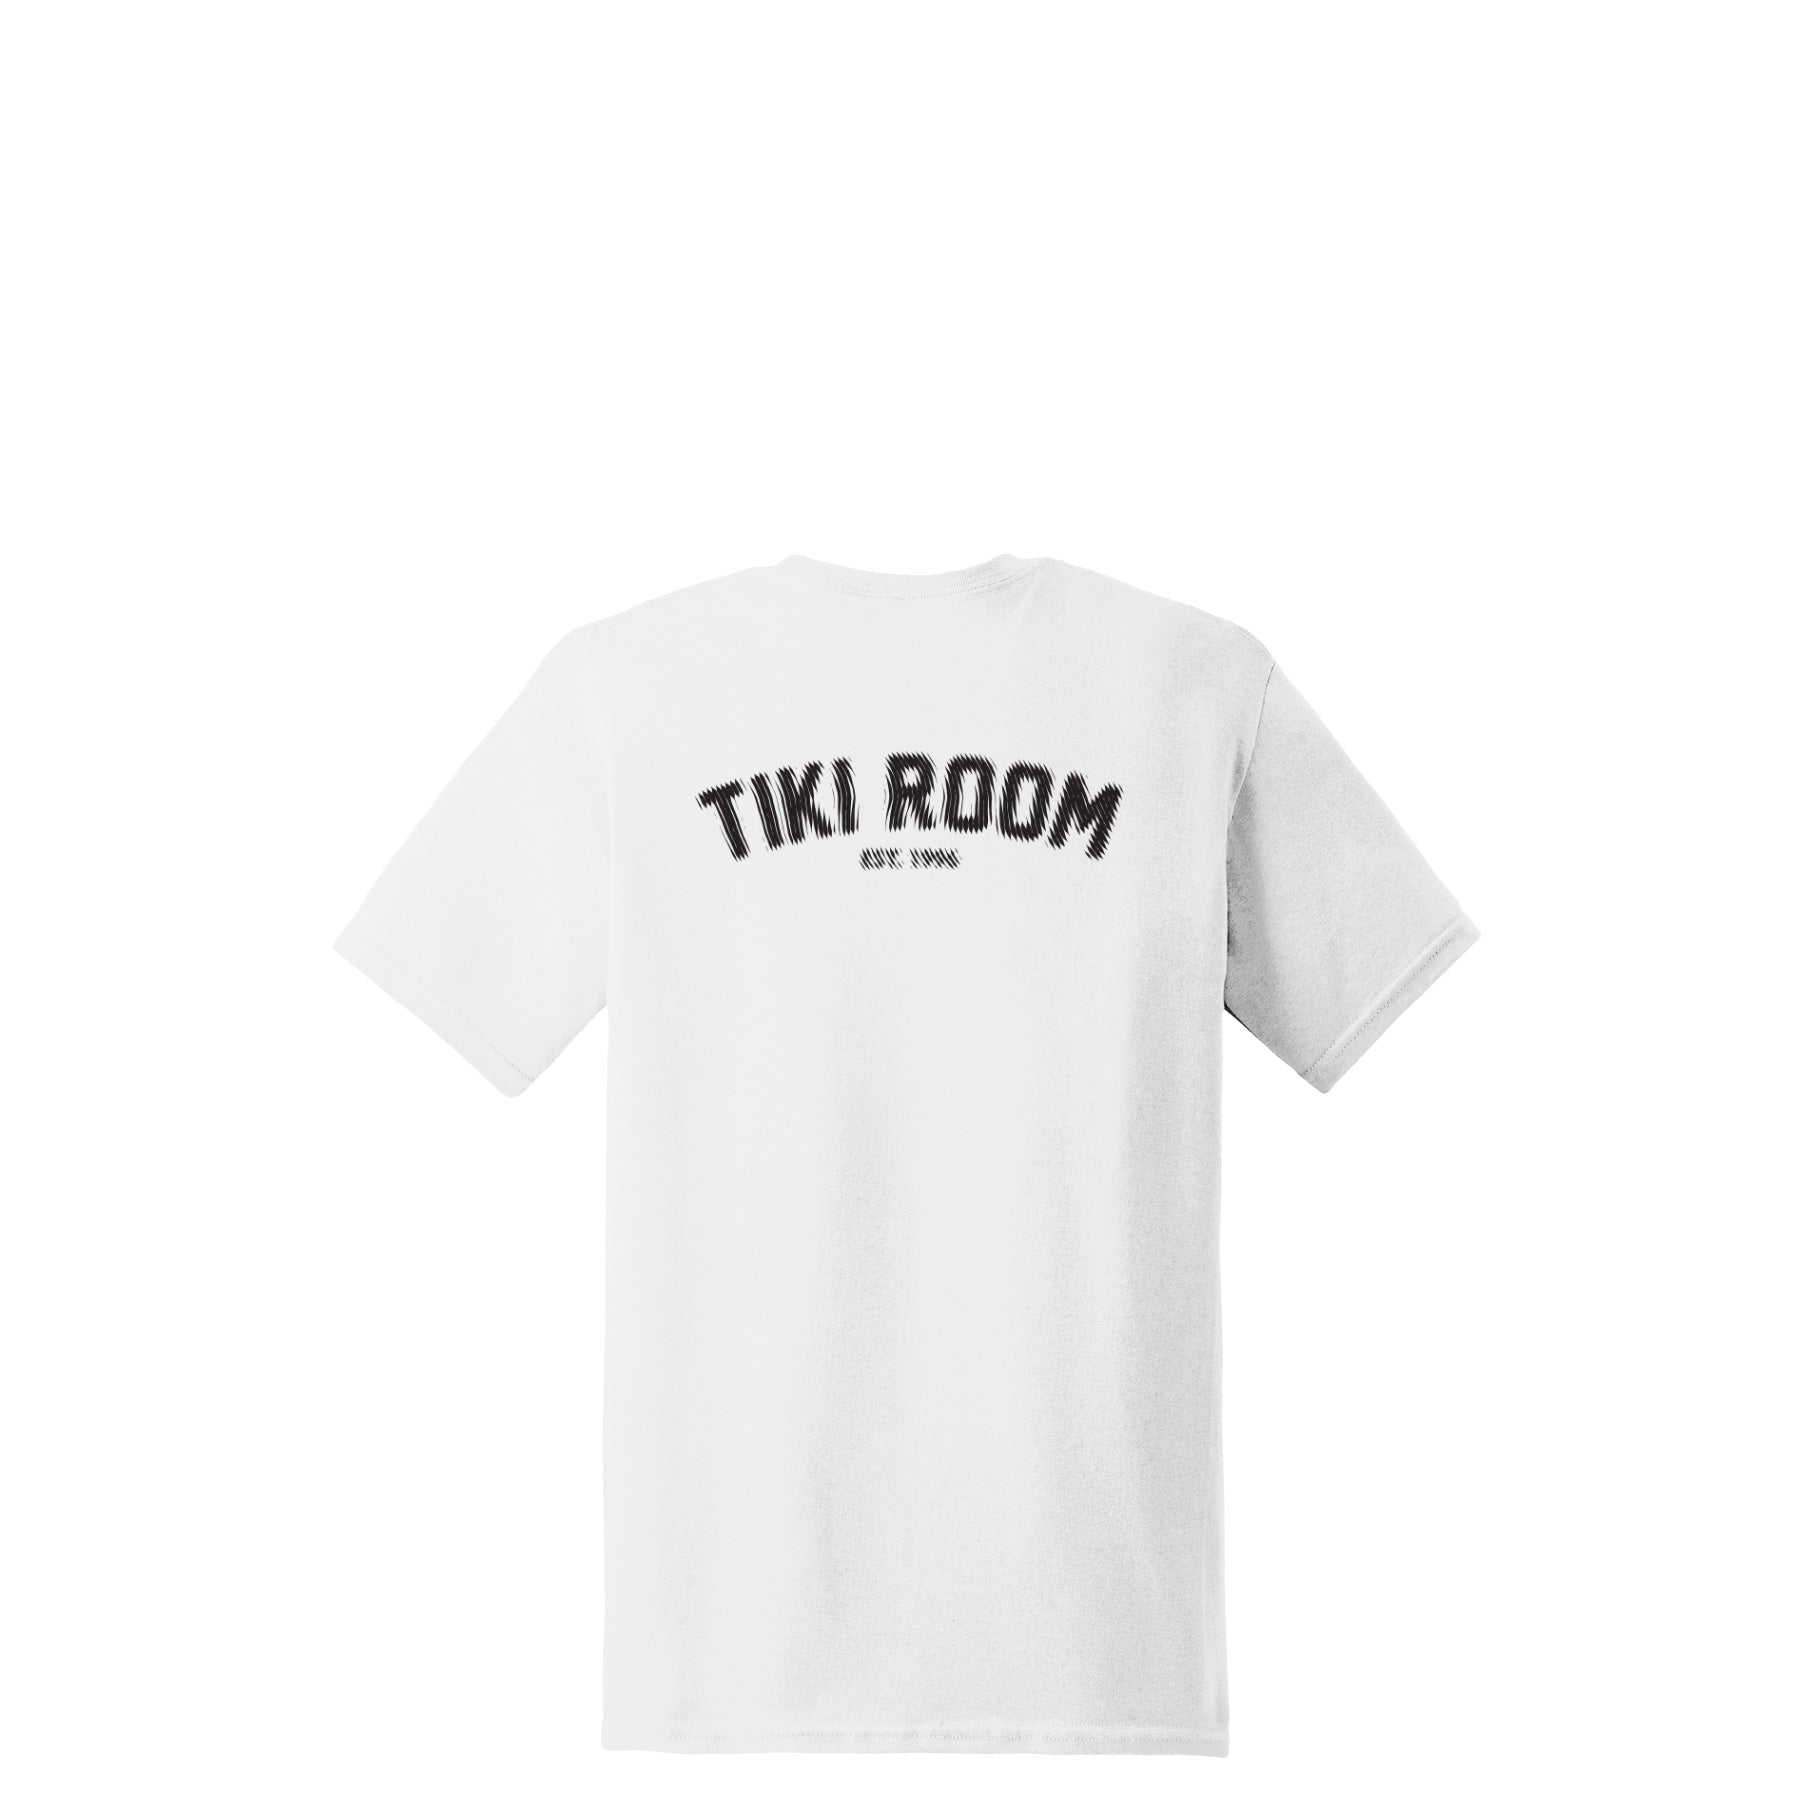 Tiki Room Halftone Arch Tee, white - Tiki Room Skateboards - 1